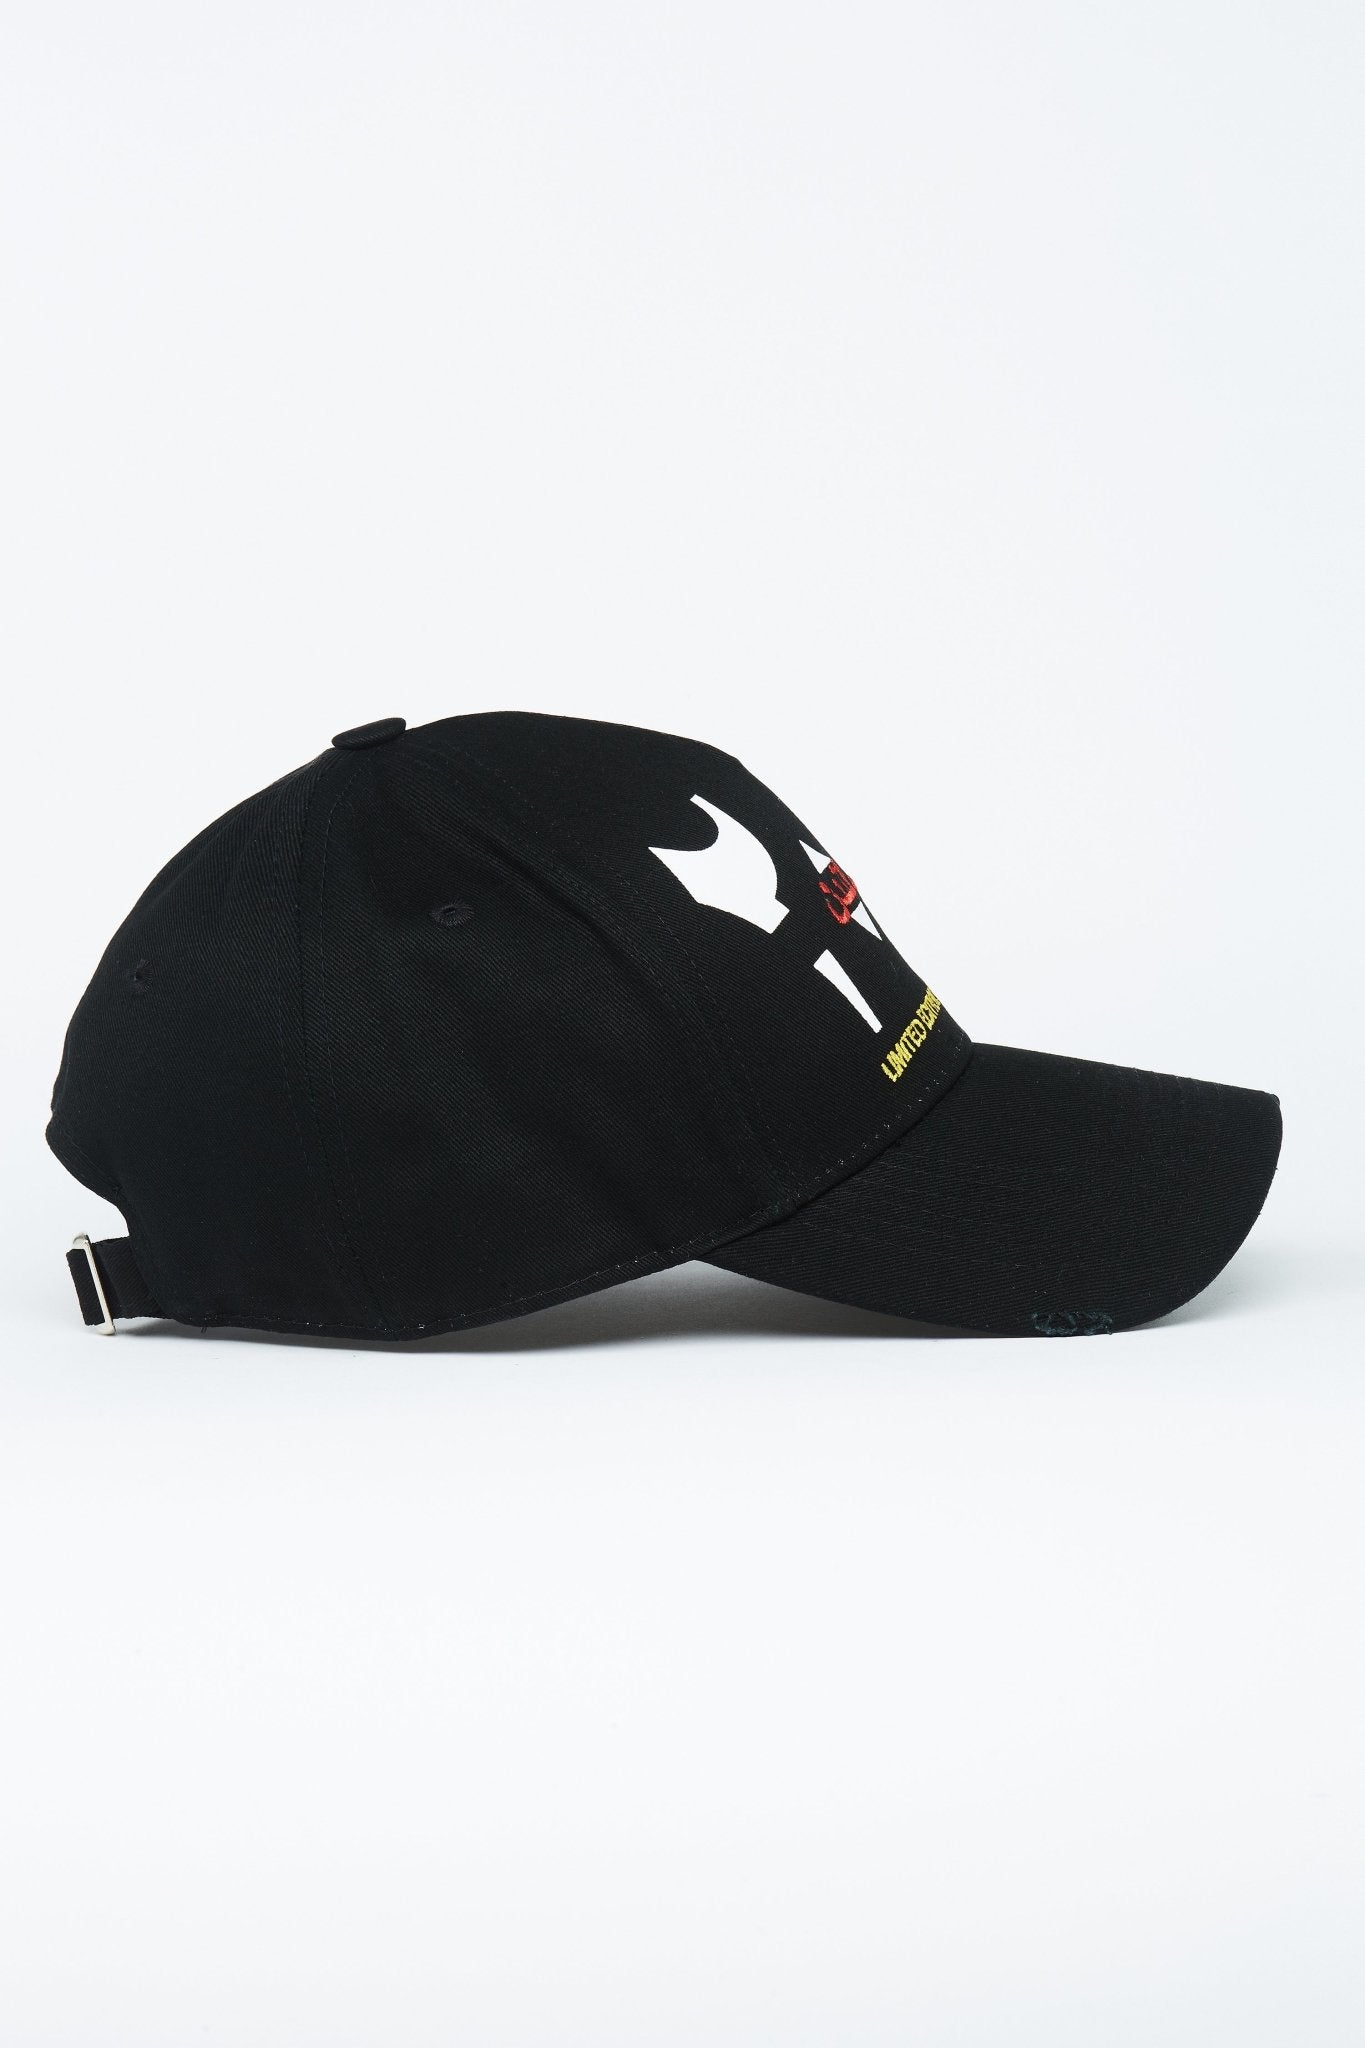 Black Cave 2016 Arabic Cap - CAVE